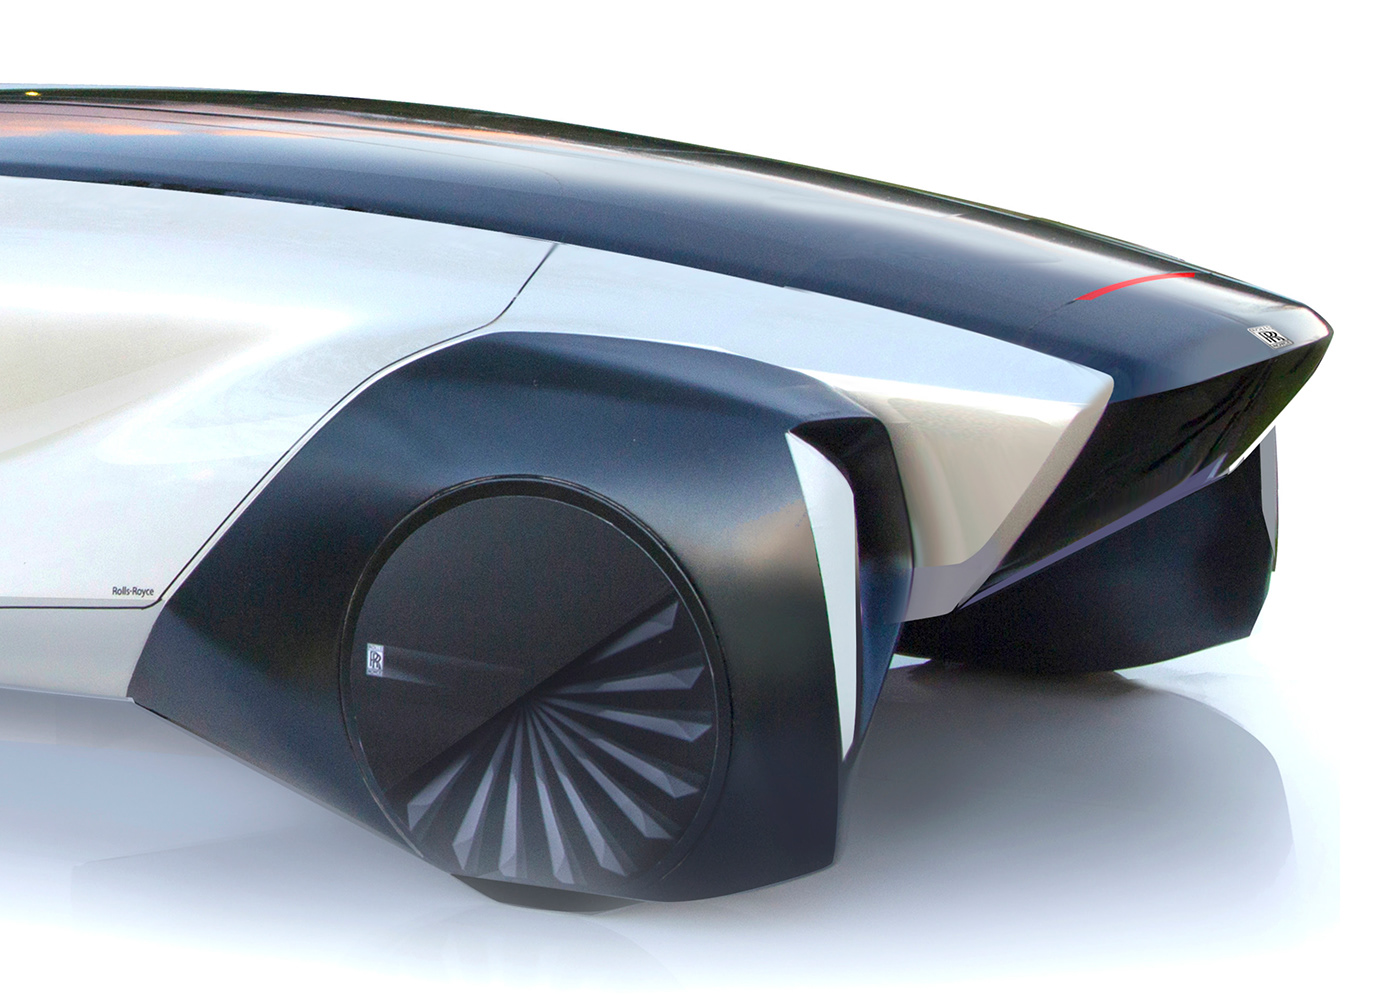 3D car CONCET design rollsroyce sketch